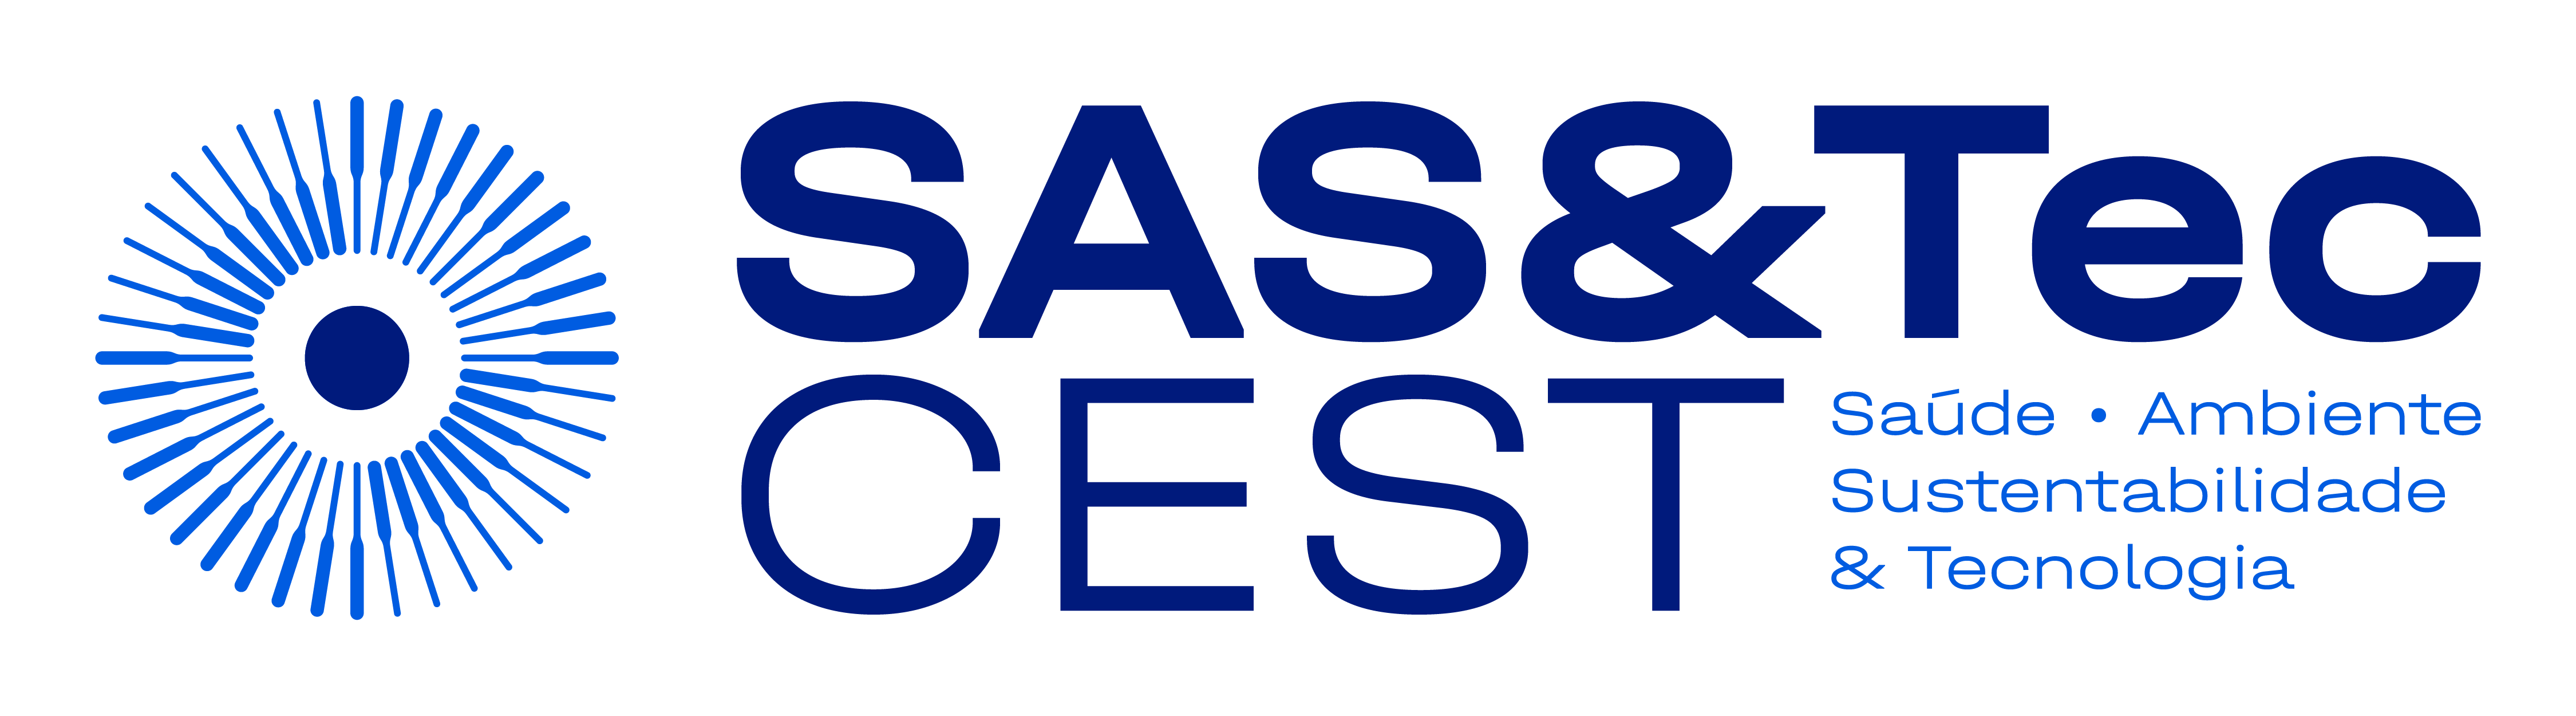 Saúde, Ambiente, Sustentabilidade & Tecnologia - SAS & Tec CEST